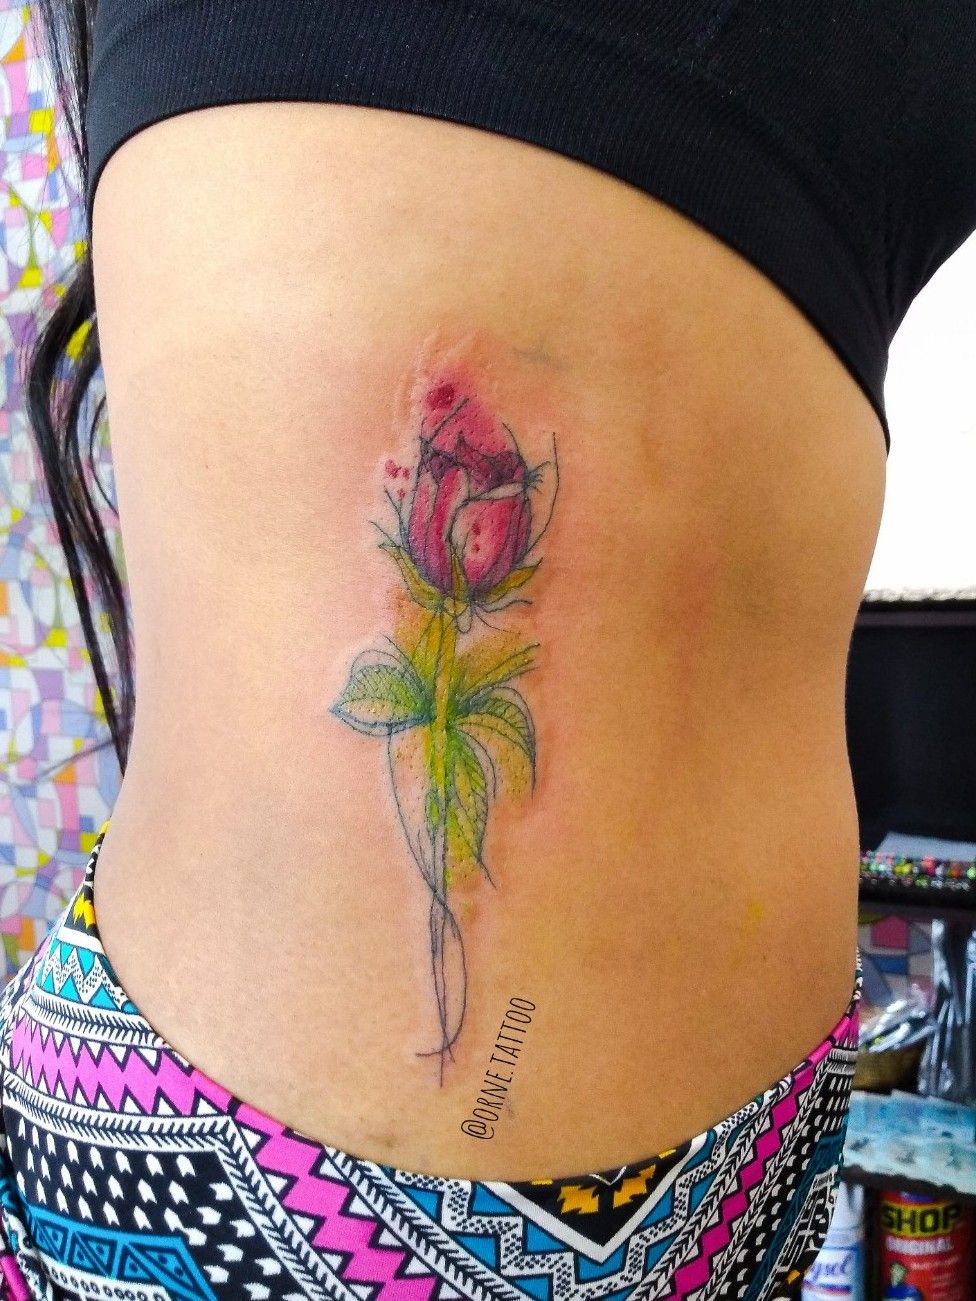 InksTambay Tattoo in DXB  Rafael x rose tattoo Side rib tattoo For  bookings and more info dm in whatsapp  link in my bio  See you  jafliyatattoo dubaitattoo tattoo tattooideas 